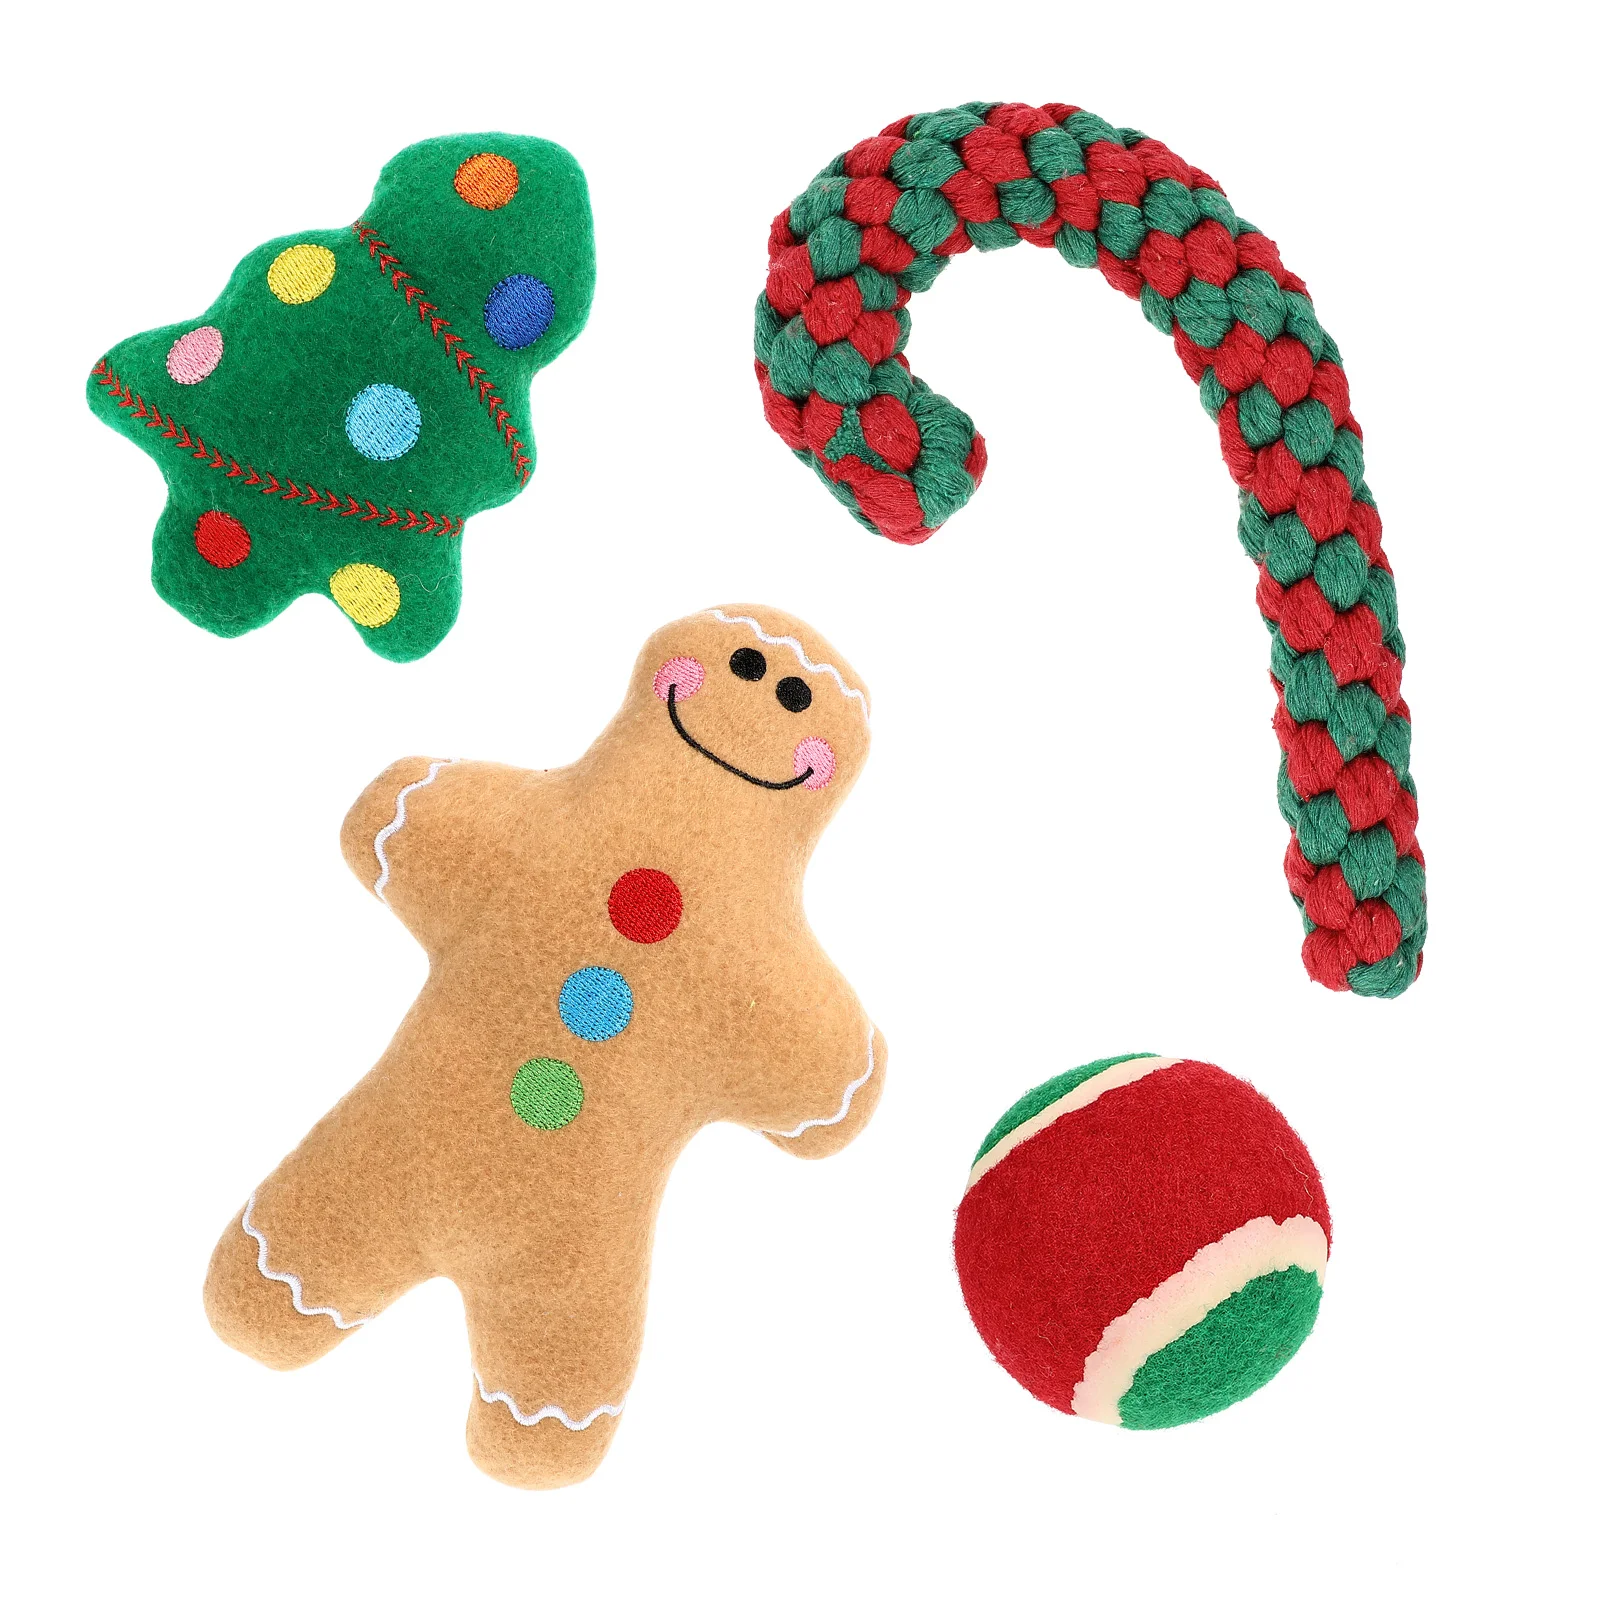 POPETPOP 4шт Коледни Писклив детски Играчки За малки Кученца, Играчки За никнене на млечни Зъби, Топка, Коледно Дърво, Човечето Човече, Играчки-Бастуни